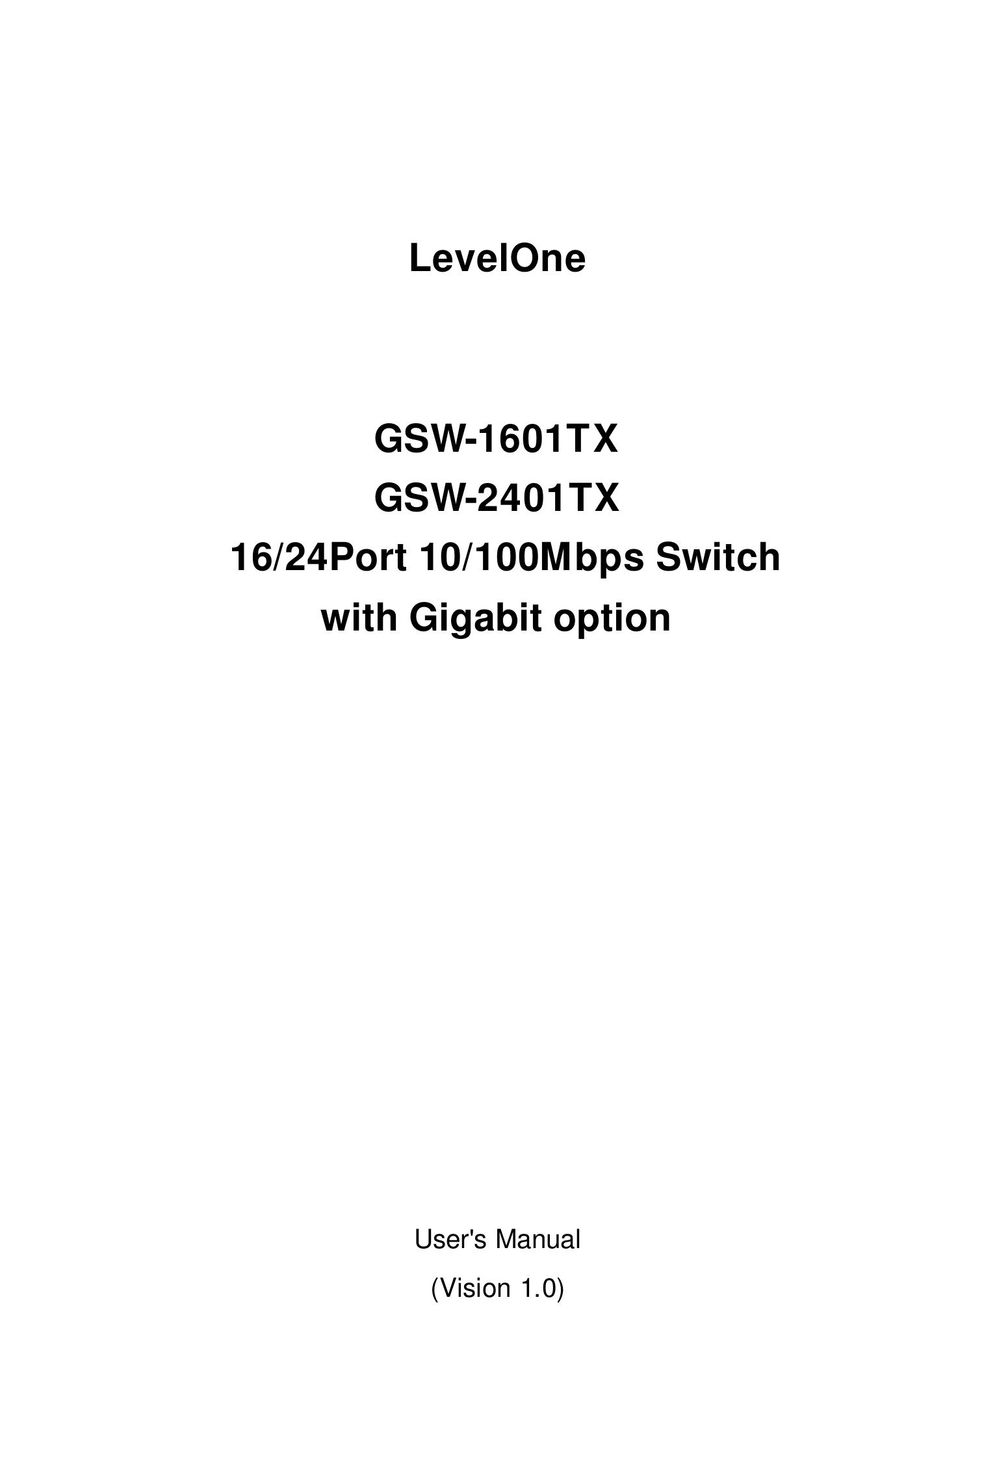 LevelOne GSW-1601TX Switch User Manual